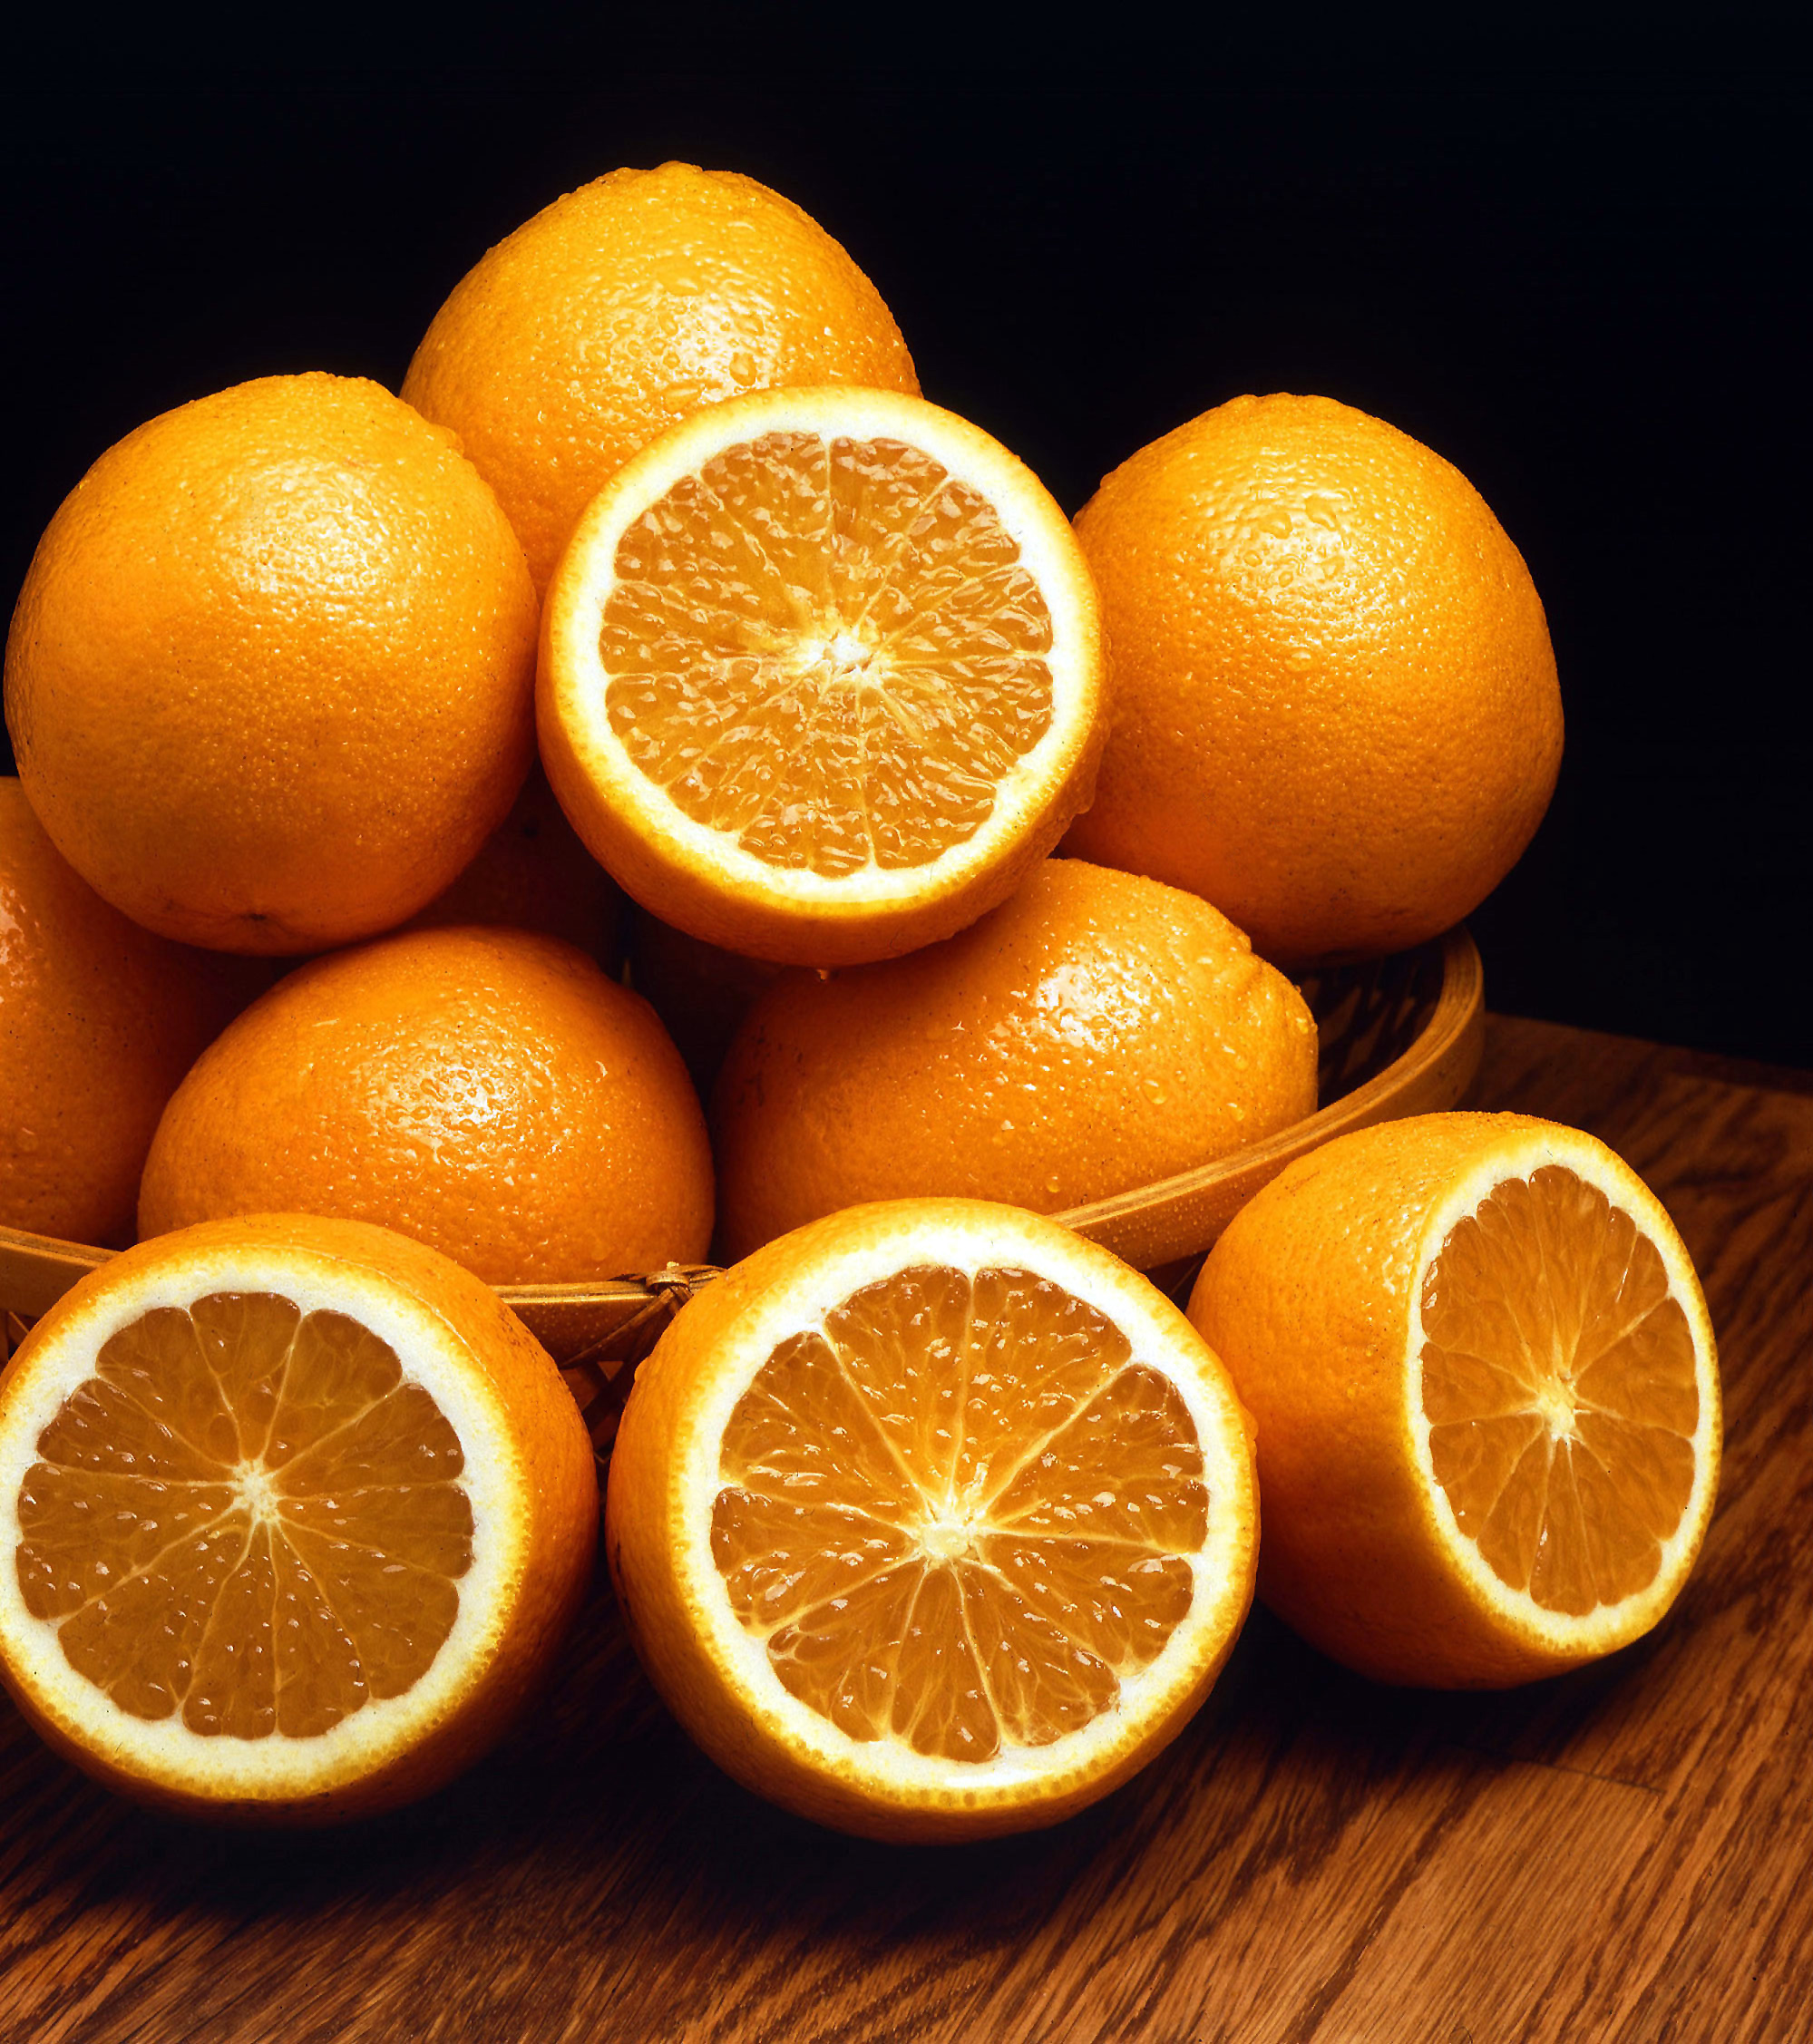 Ambersweet oranges - فوائد تناول قشر البرتقال .. وكيفية تجفيفه في المنزل بخطوات سهلة وبسيطة